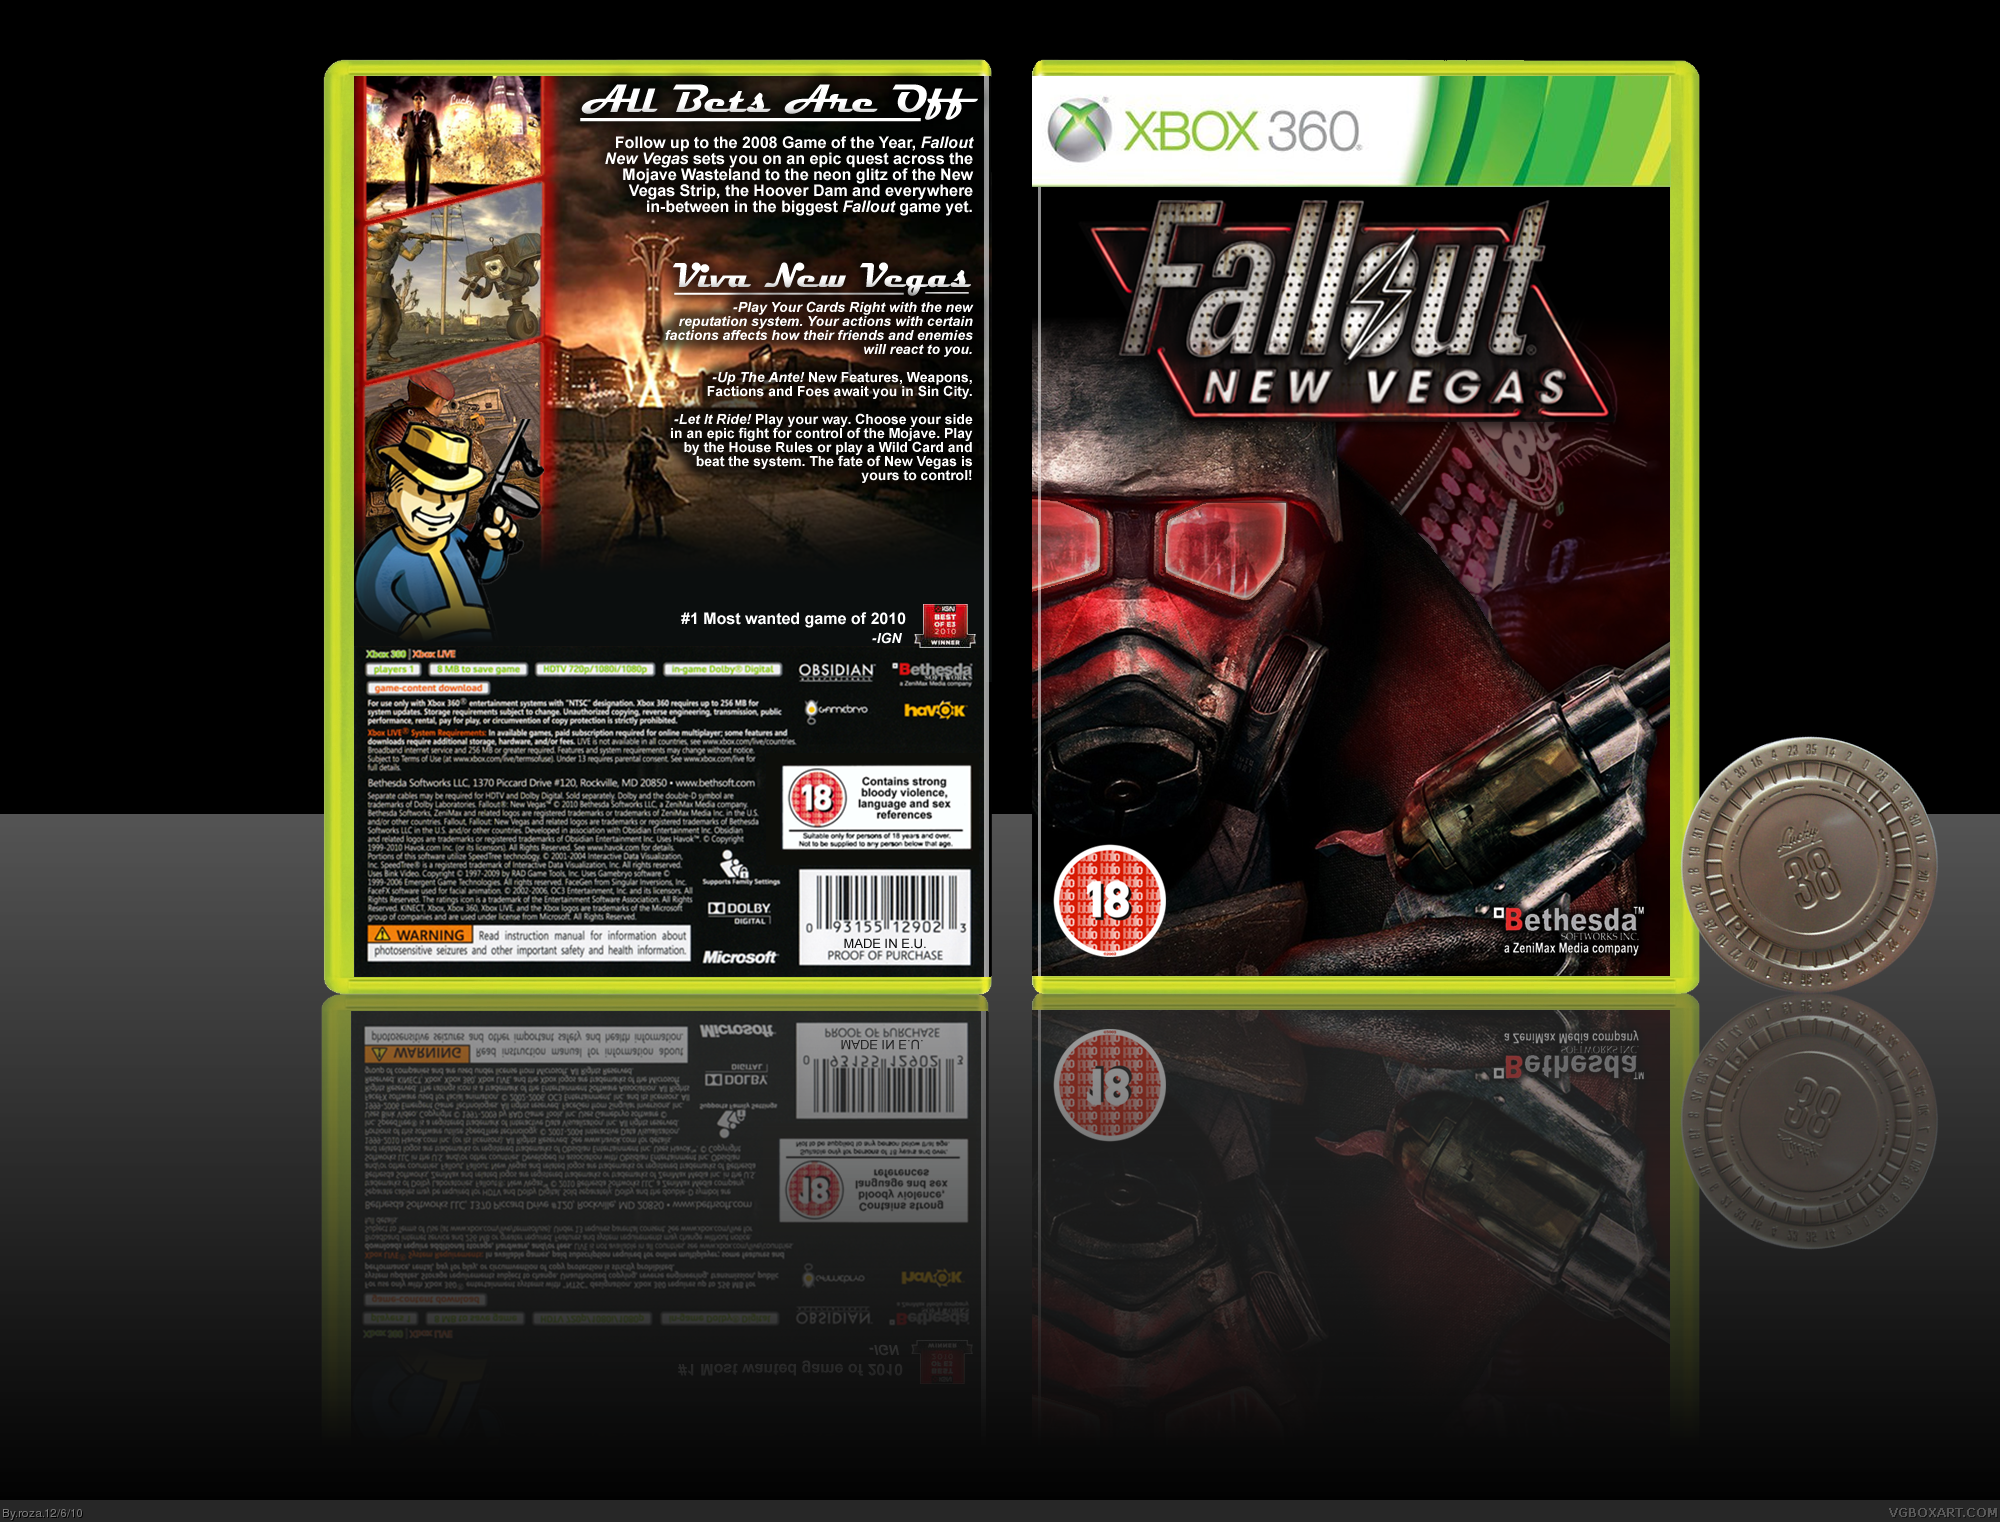 Fallout: New Vegas box cover